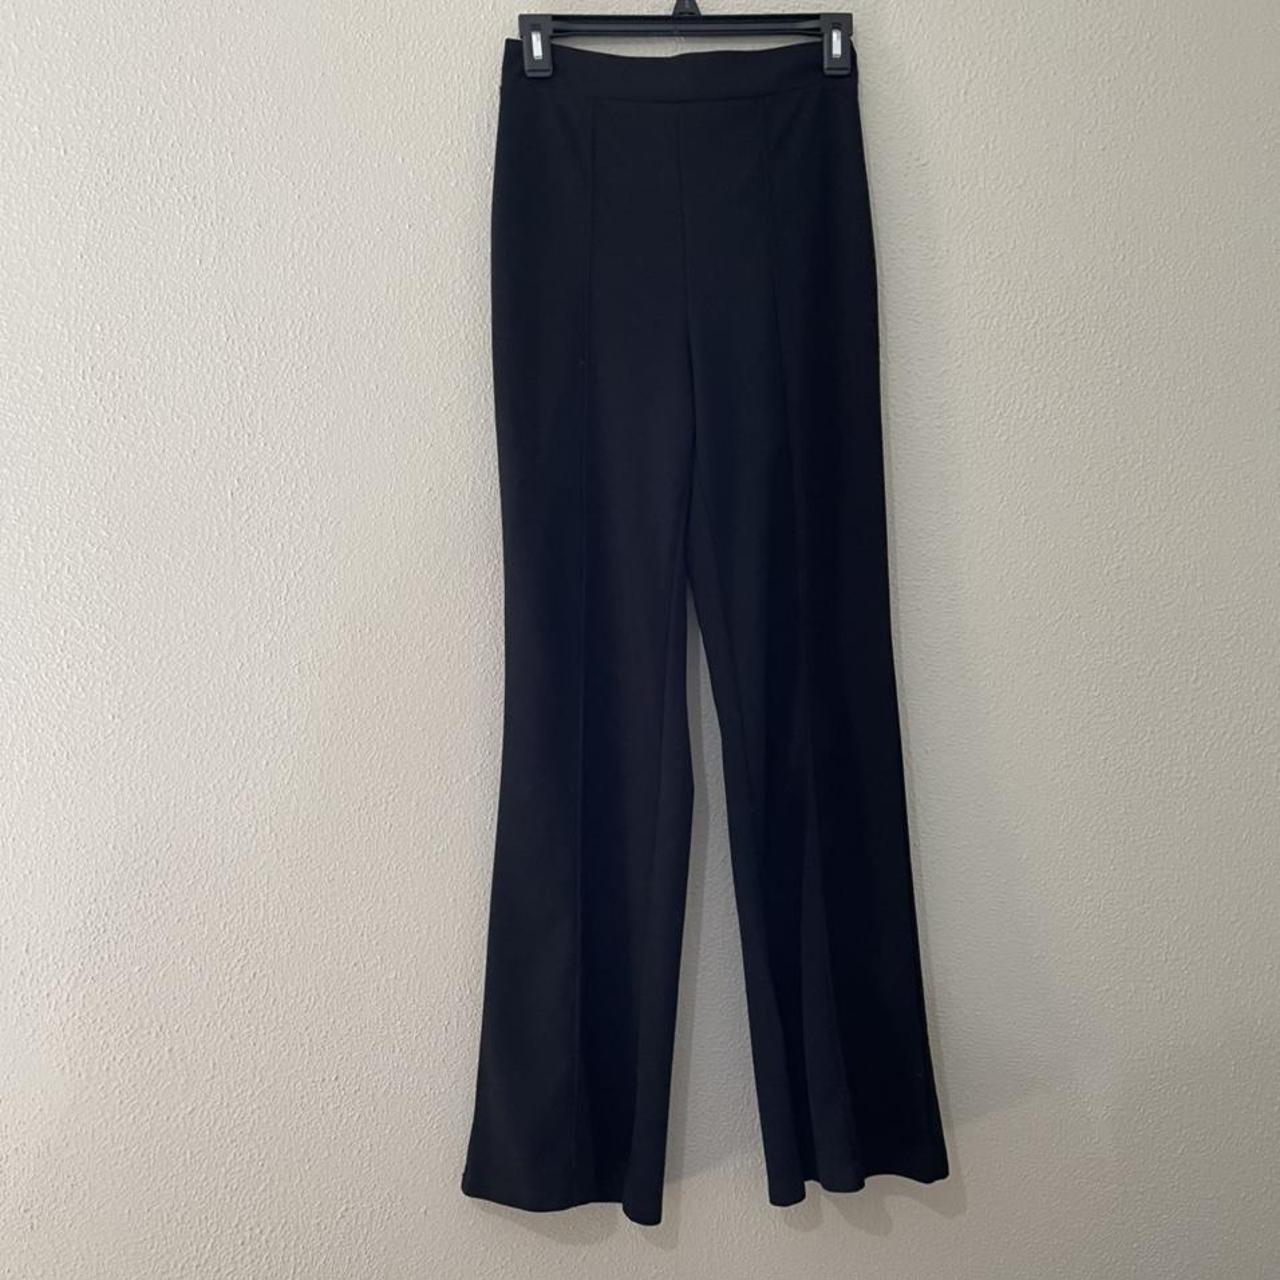 SHEIN Women's Black Trousers (2)